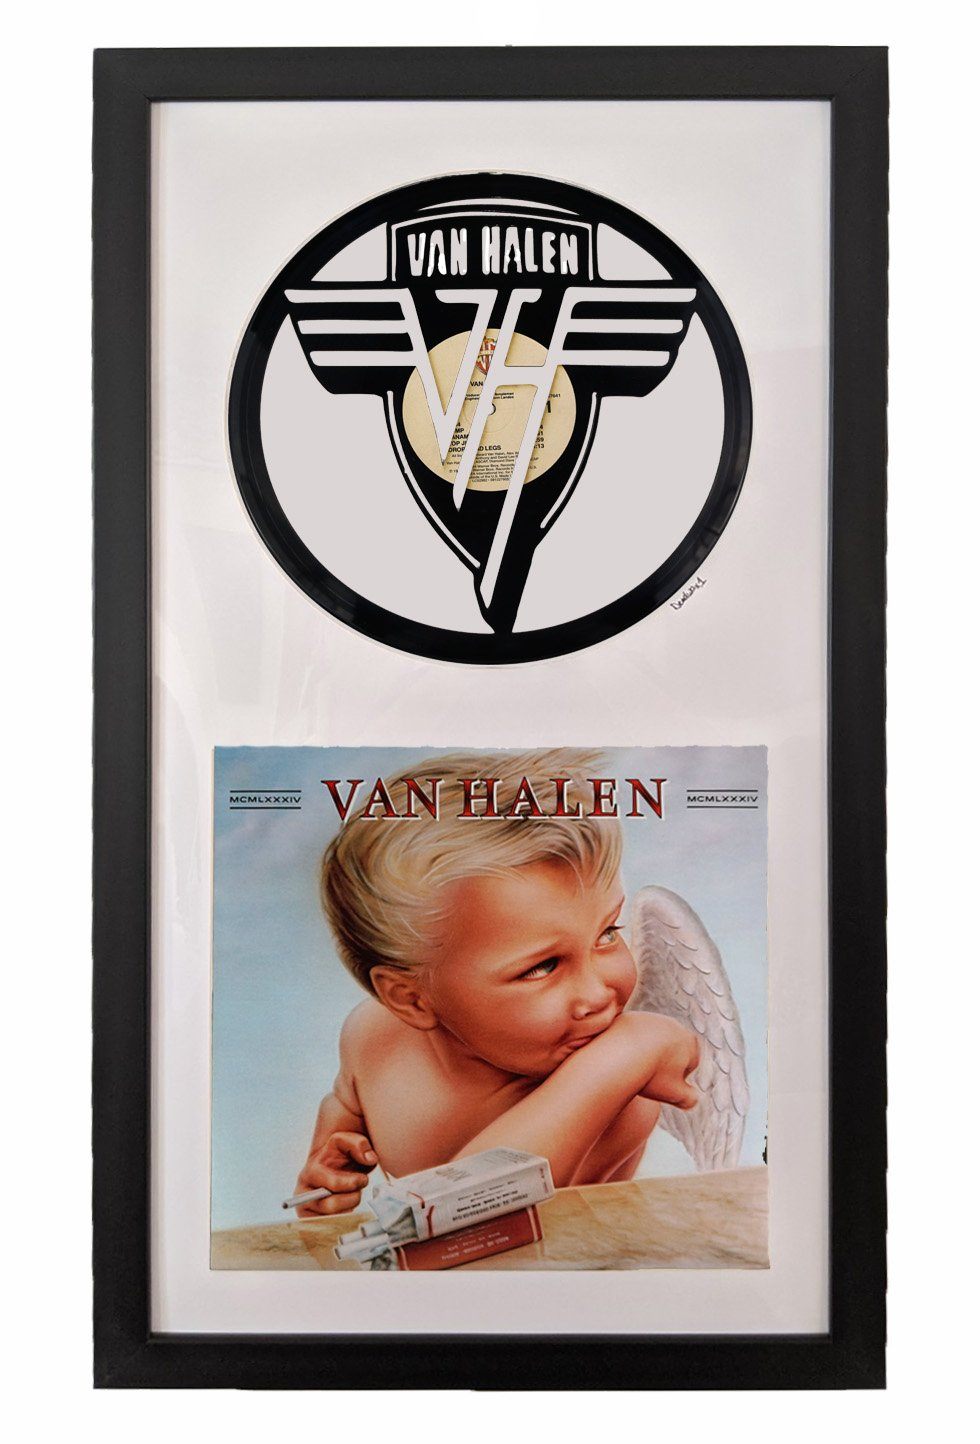 Van Halen Vinyl Record Art Deadwax